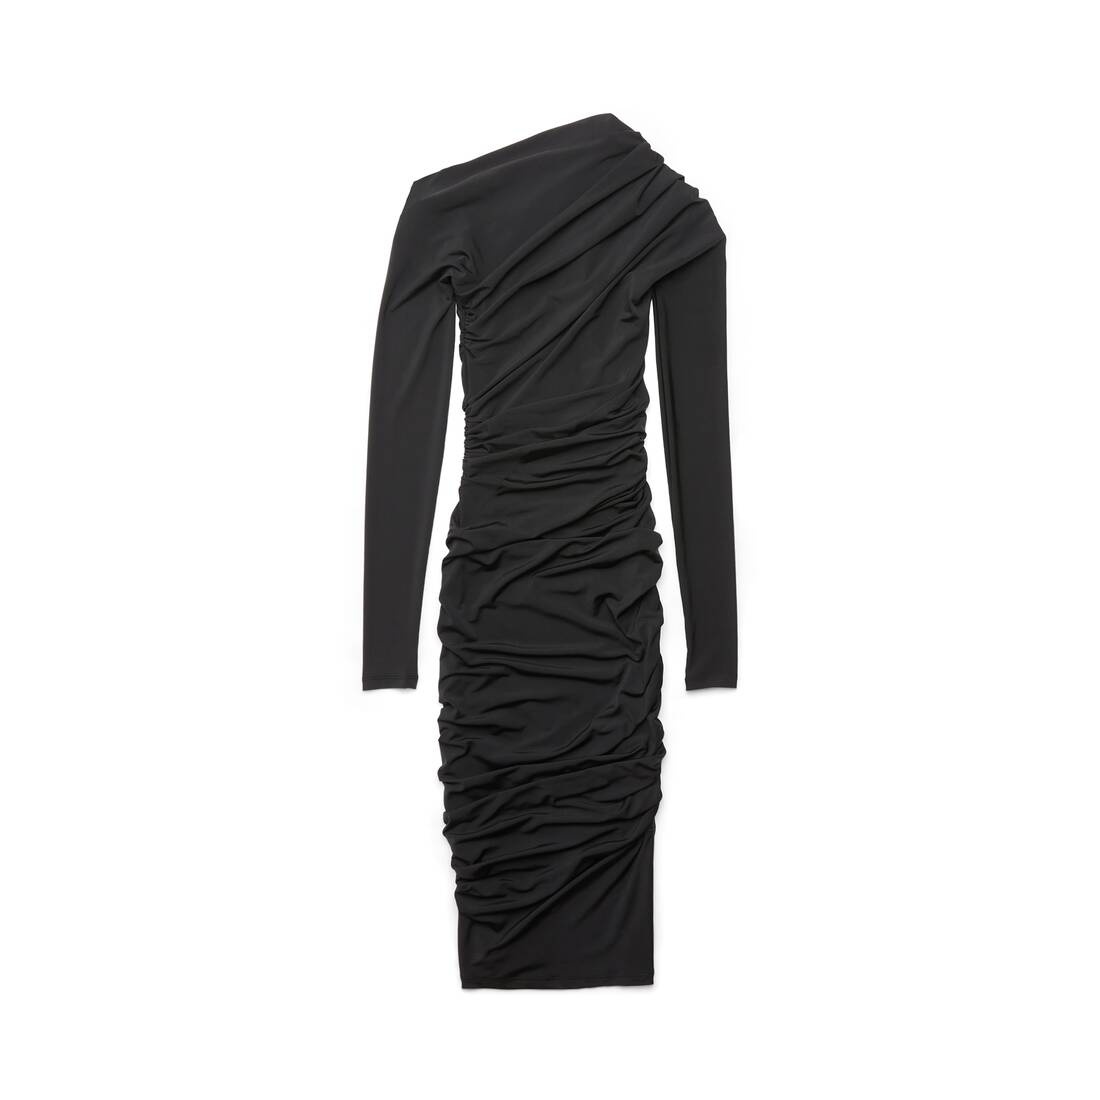 Women's Twisted Mini Dress in Black - 1